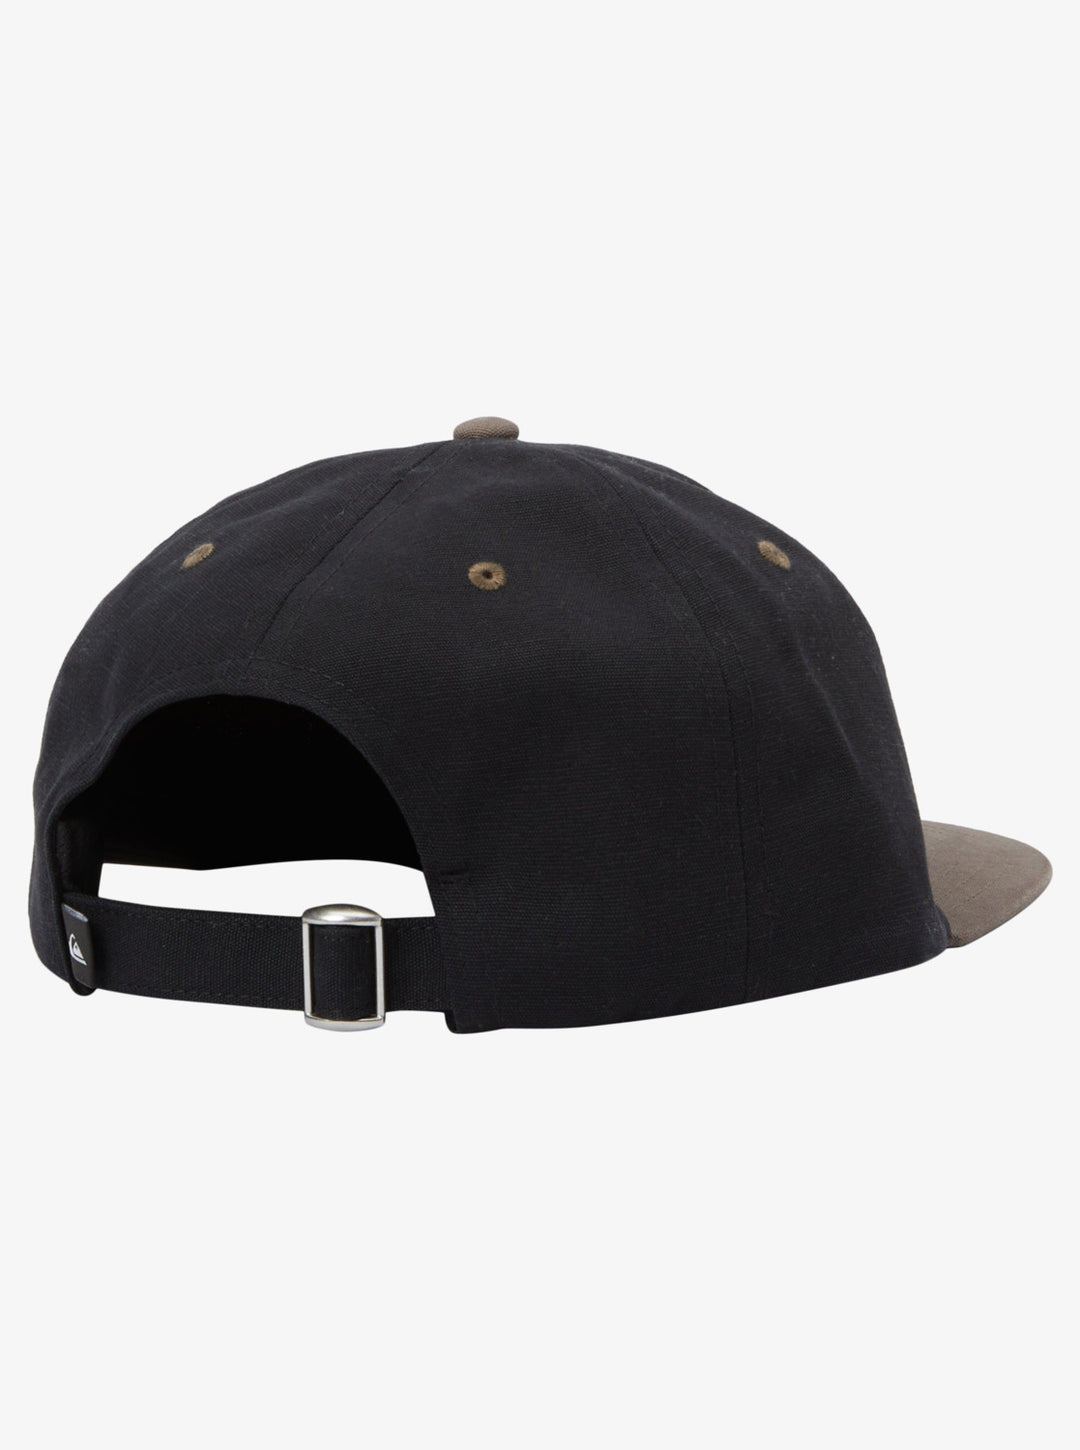 Quiksilver Hat Zinger- Black/Jet Black - Sun Diego Boardshop